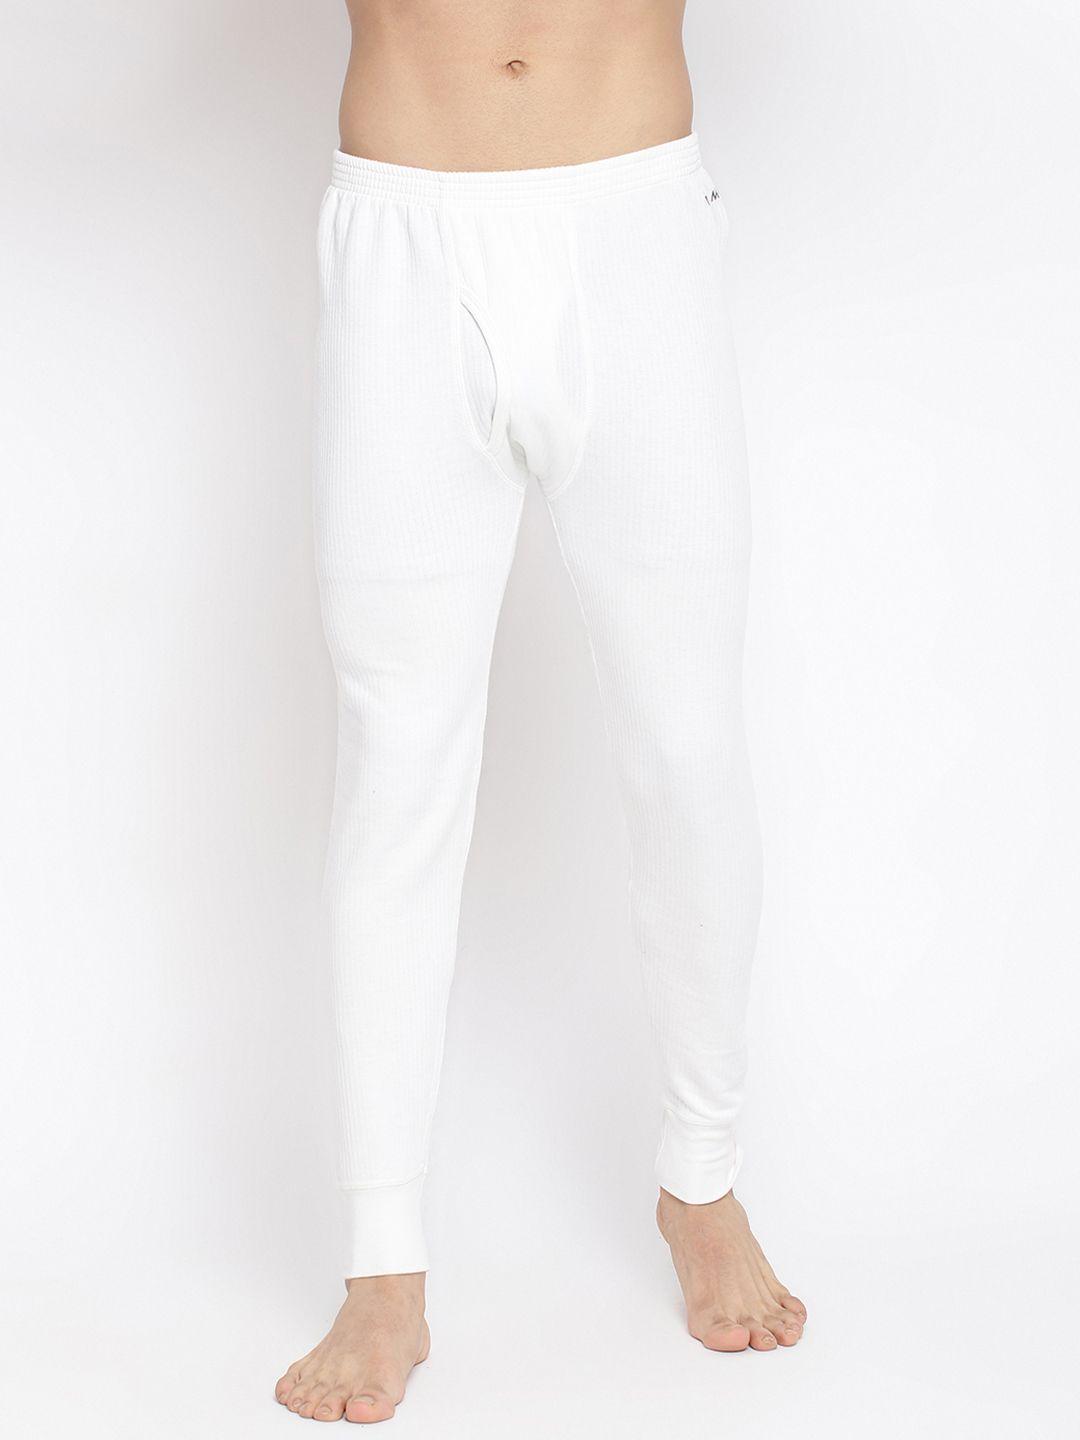 almo-wear-men-white-ribbed-cotton-thermal-pants